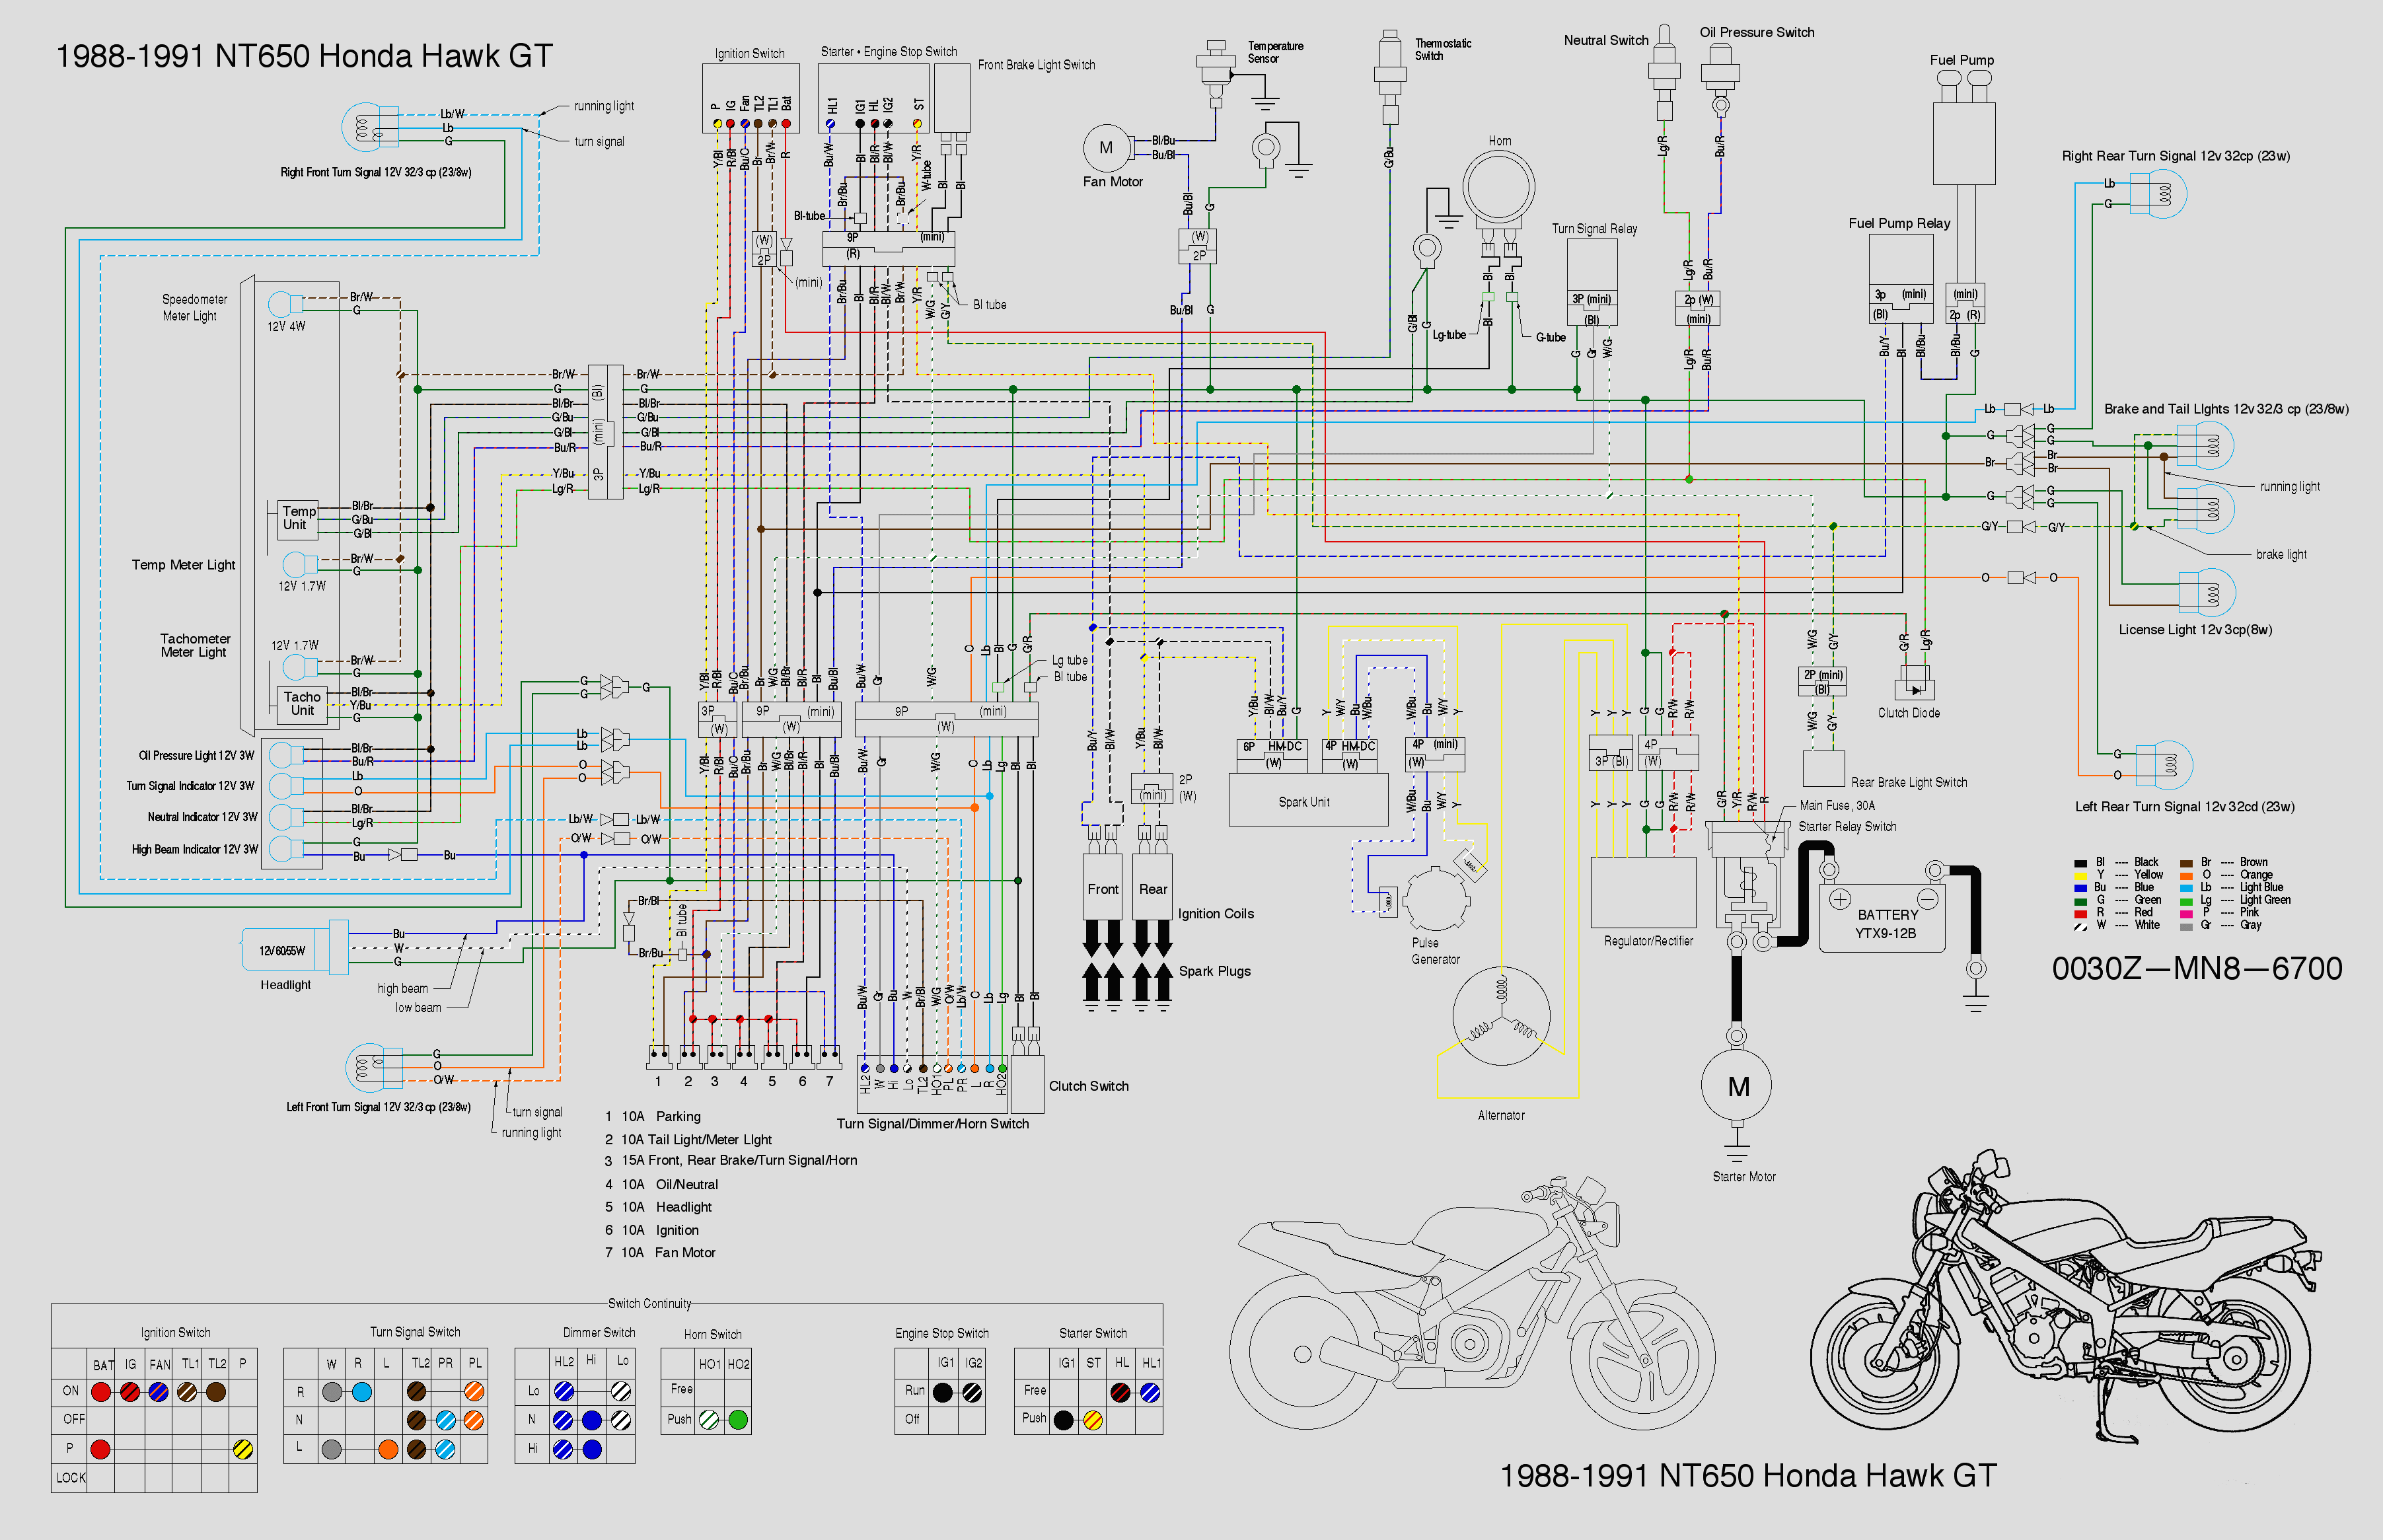 Suzuki Samurai Starter Wiring Diagram from fastgm.com